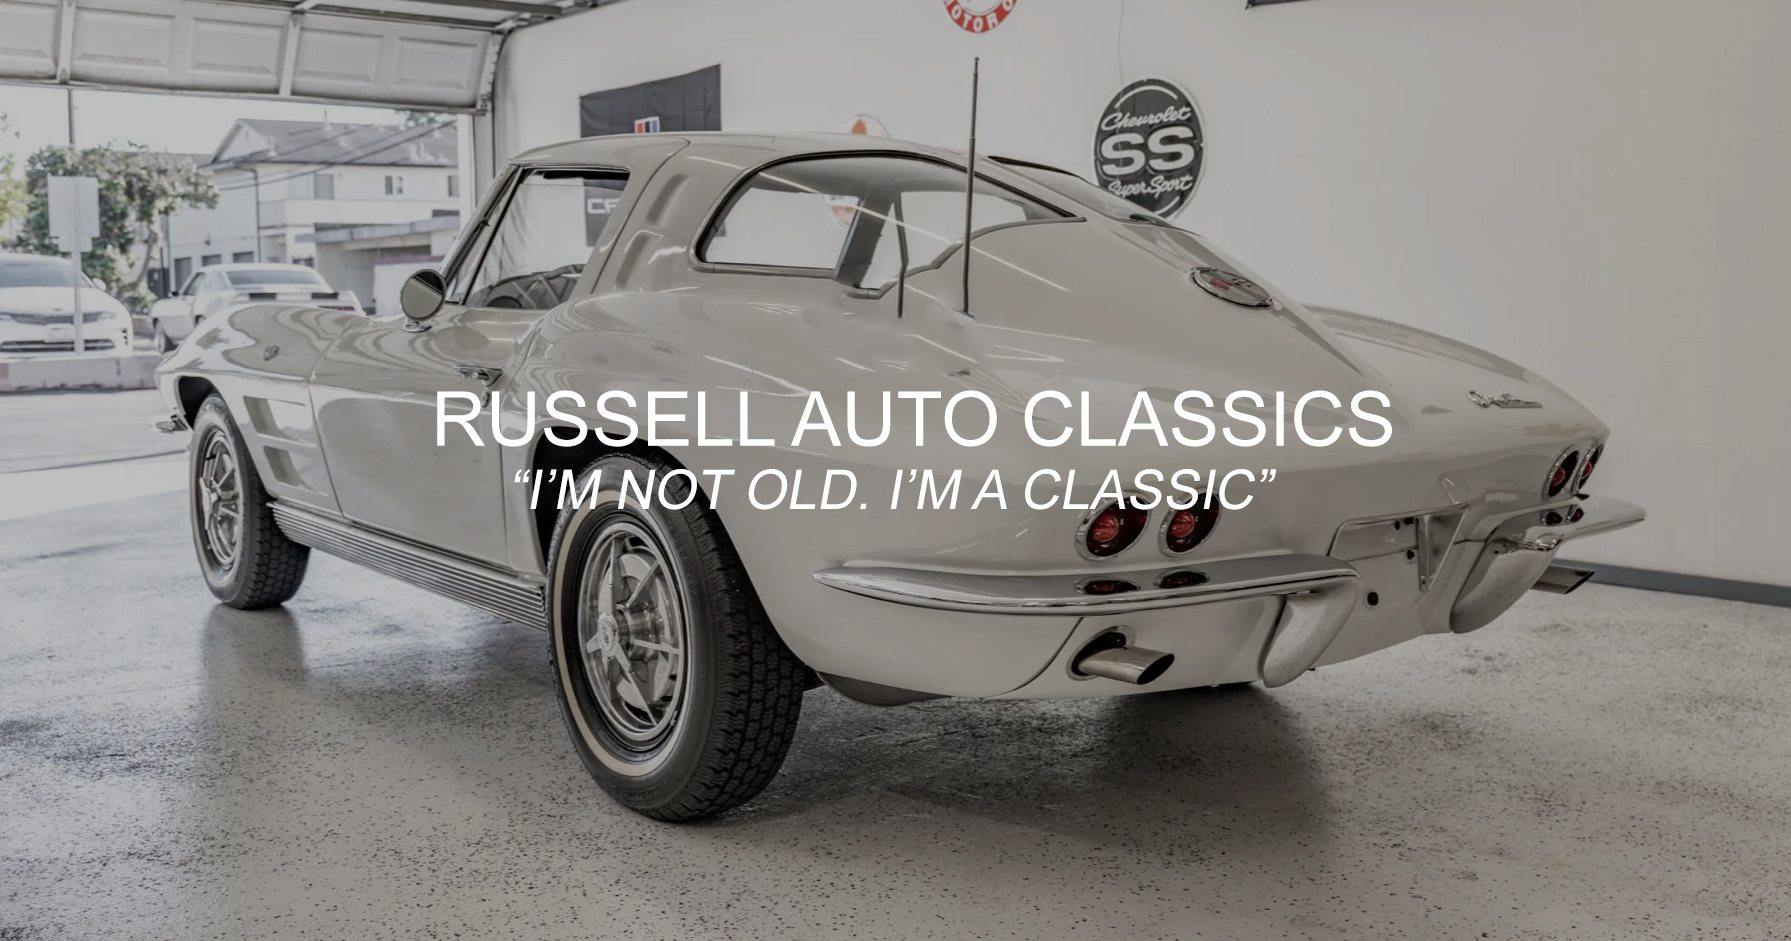 Russell Auto Classics